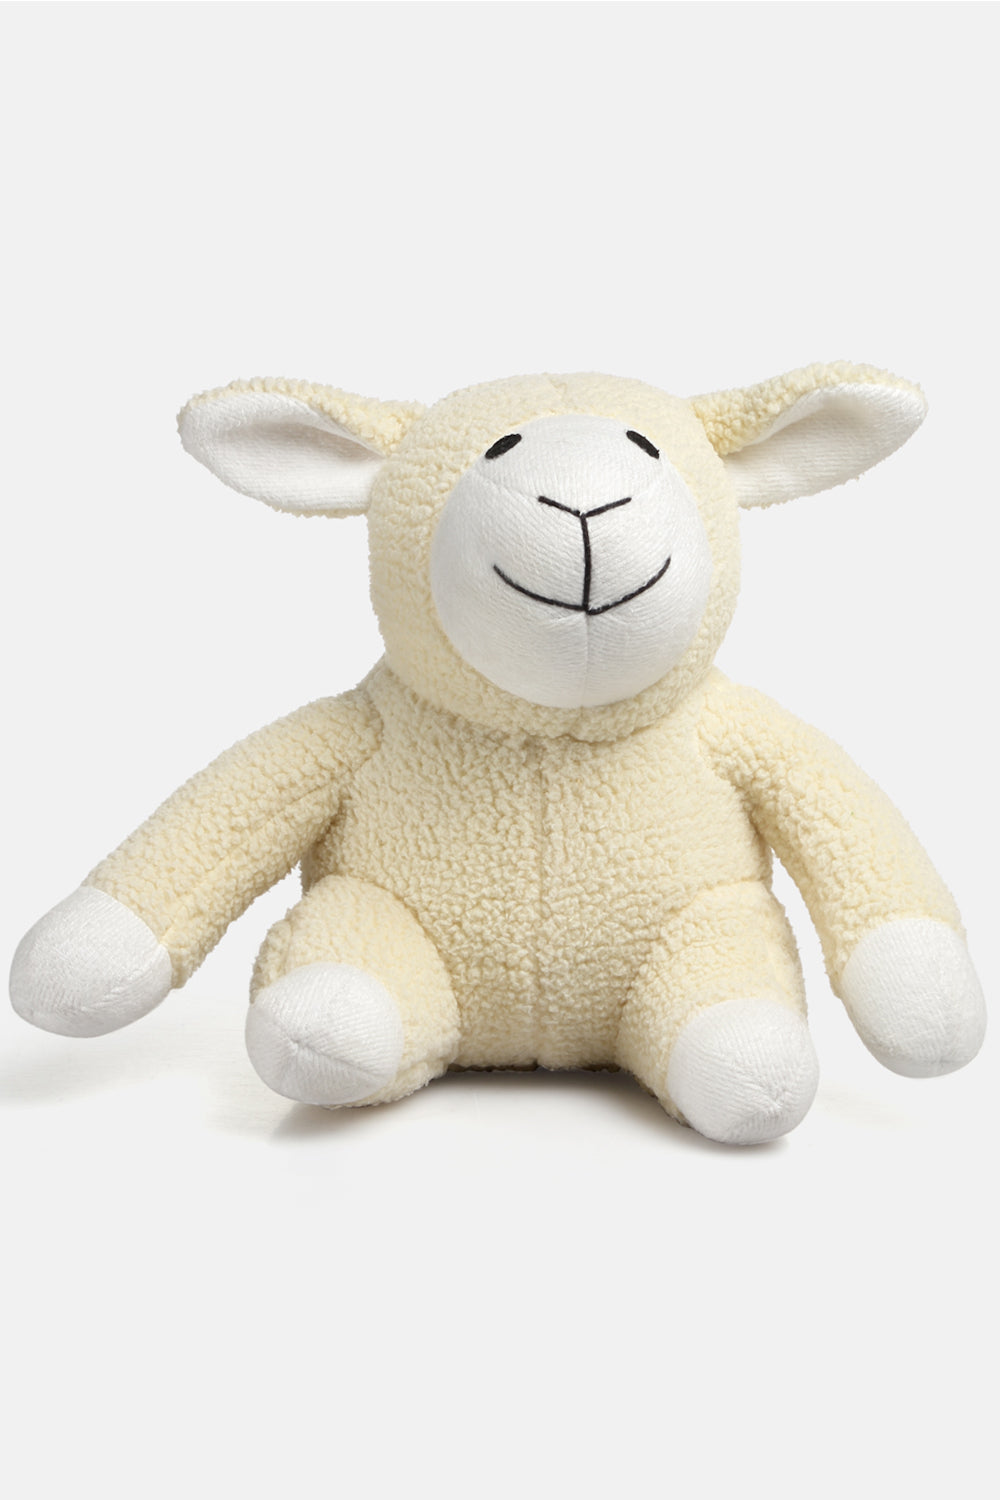 Lazy Sheep Baby Soft Toy